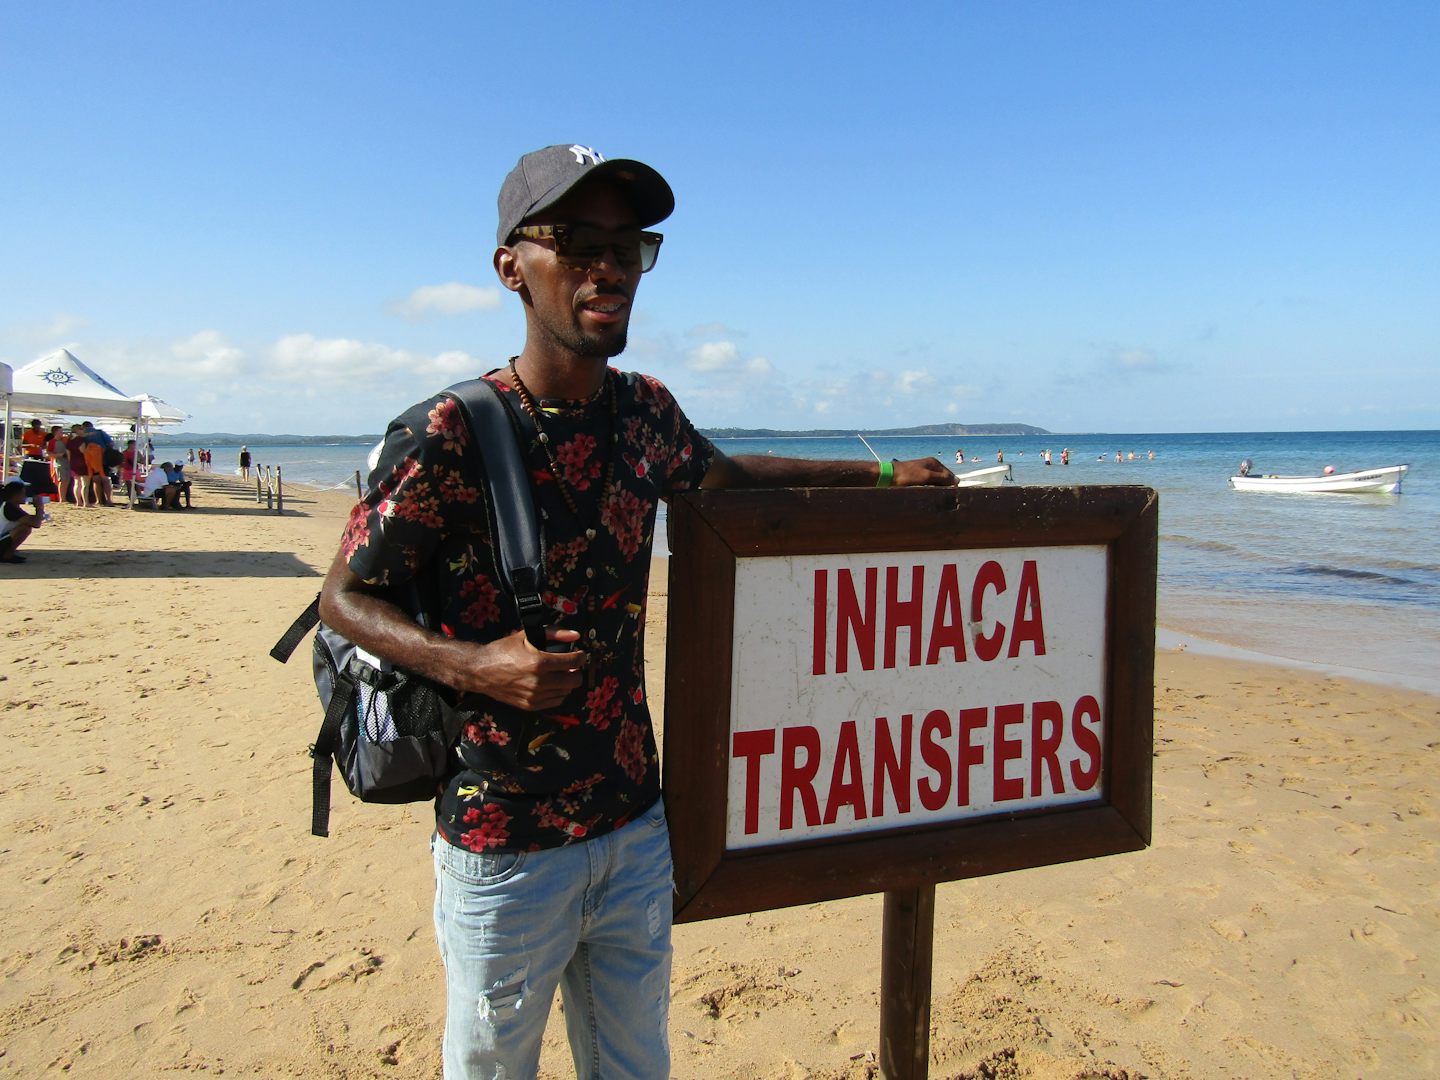 Inhaca transfers port